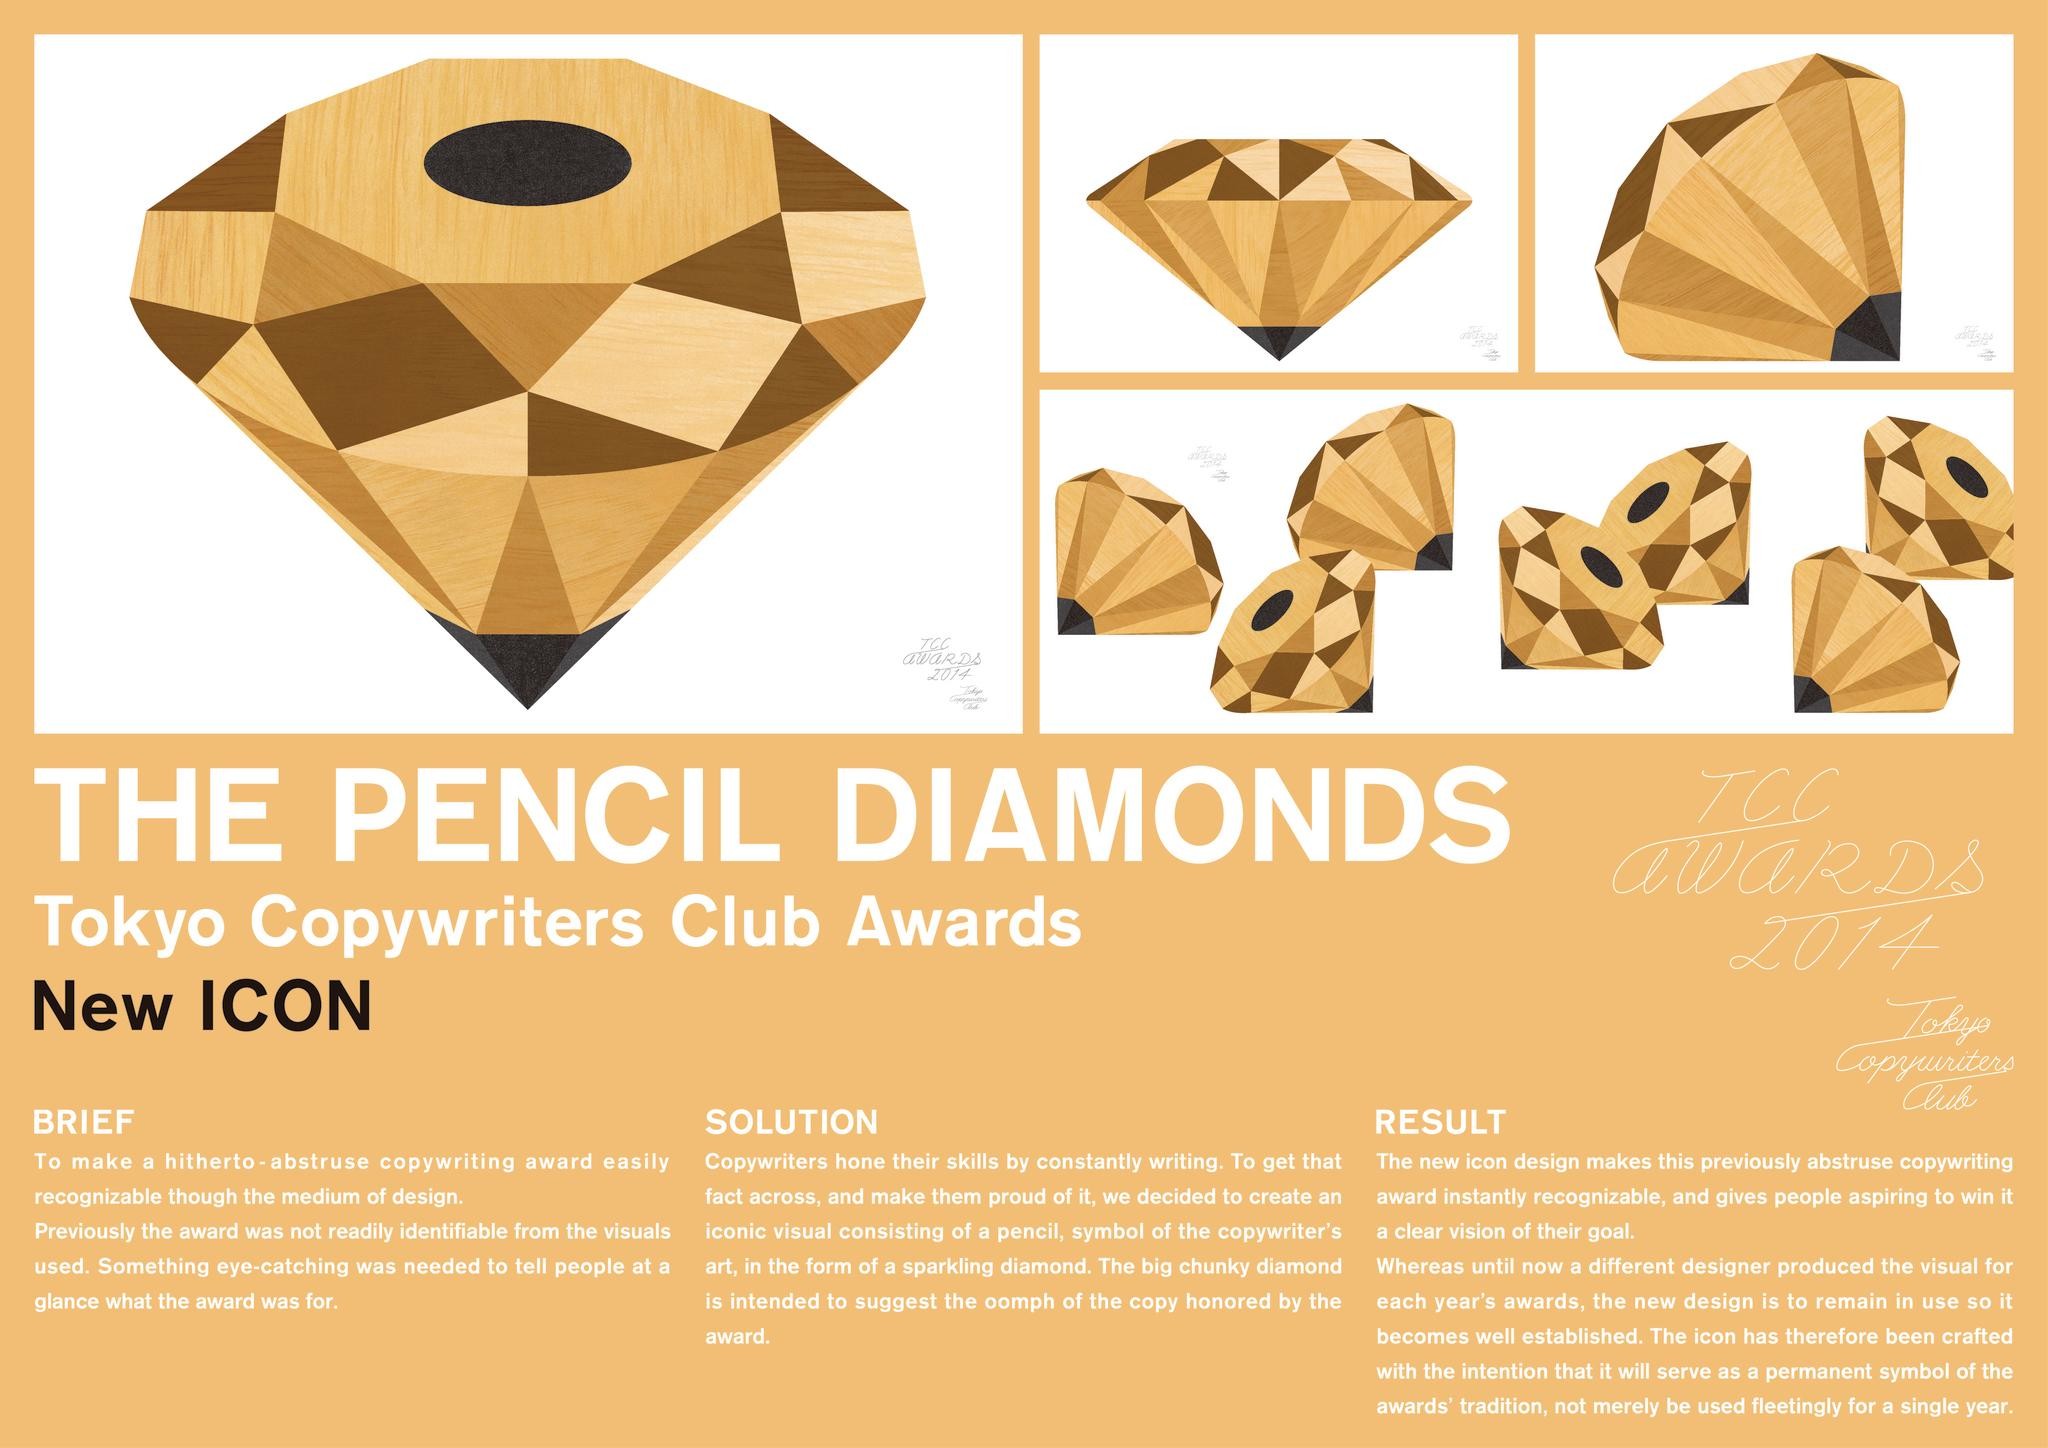 THE PENCIL DIAMONDS